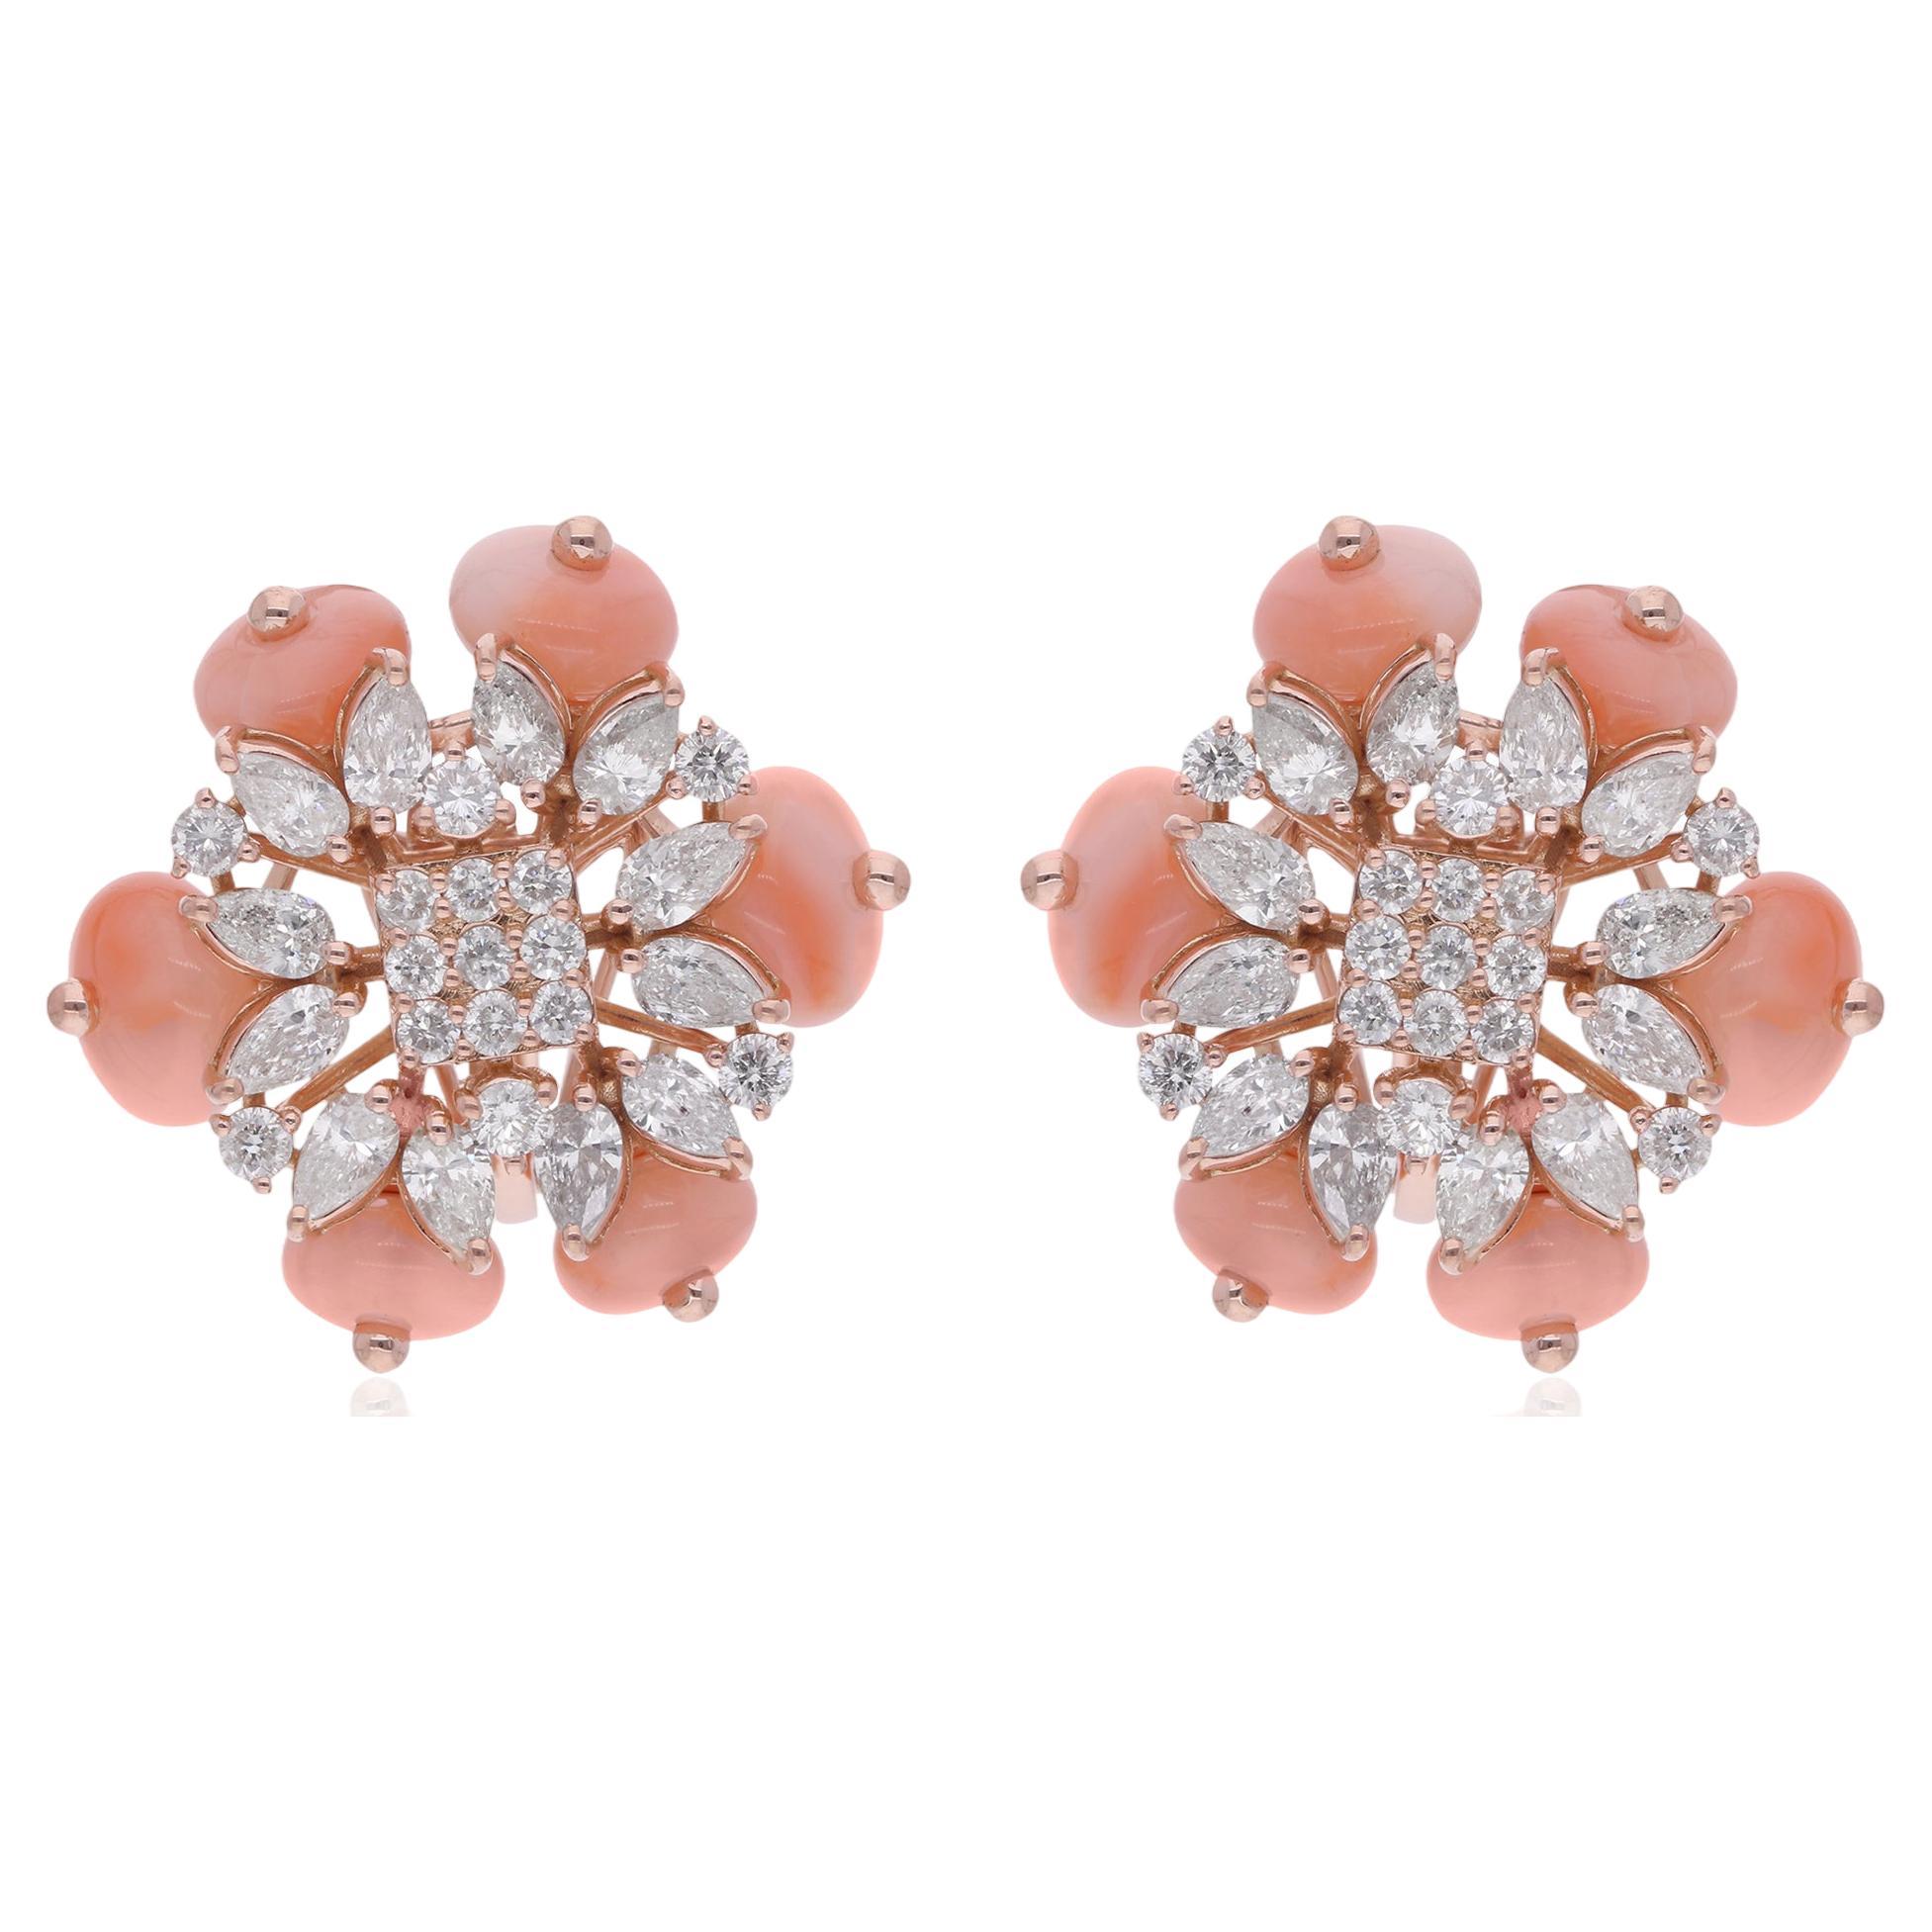 Coral Gemstone Beads Earrings Marquise Round Diamond 14 Karat Rose Gold Jewelry